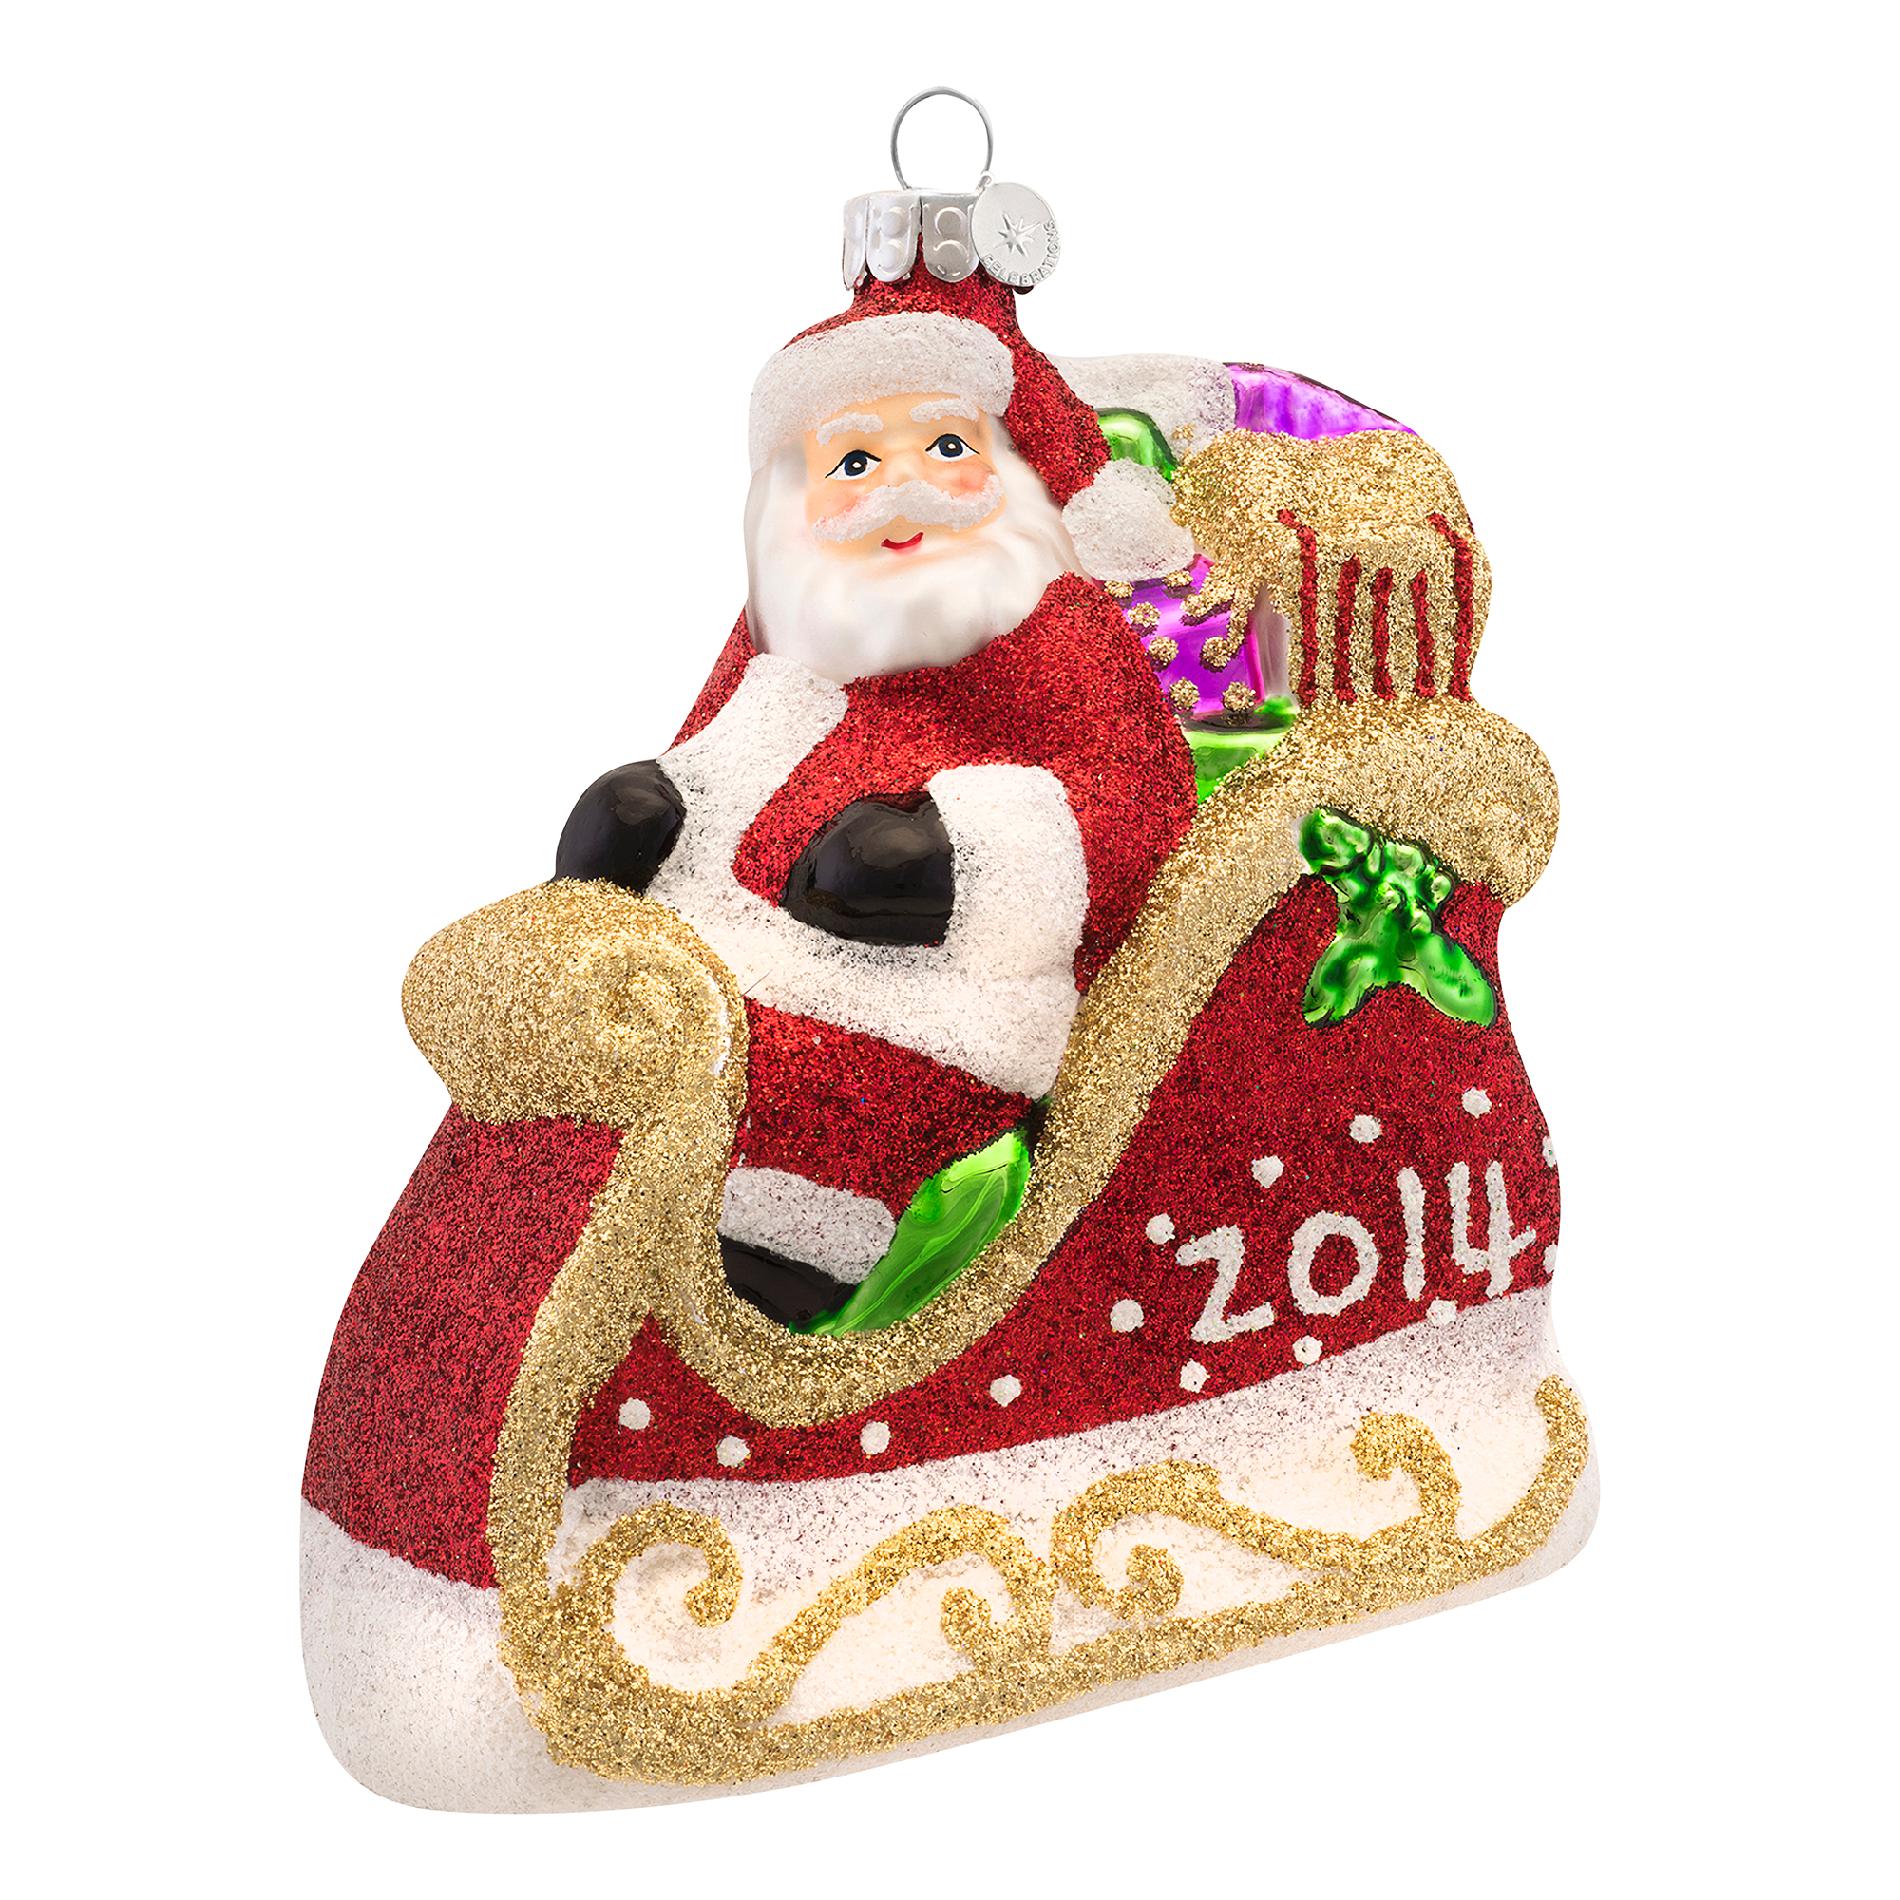 Celebrations by Radko 5" Radko Dated Santa in Sleigh Ornament